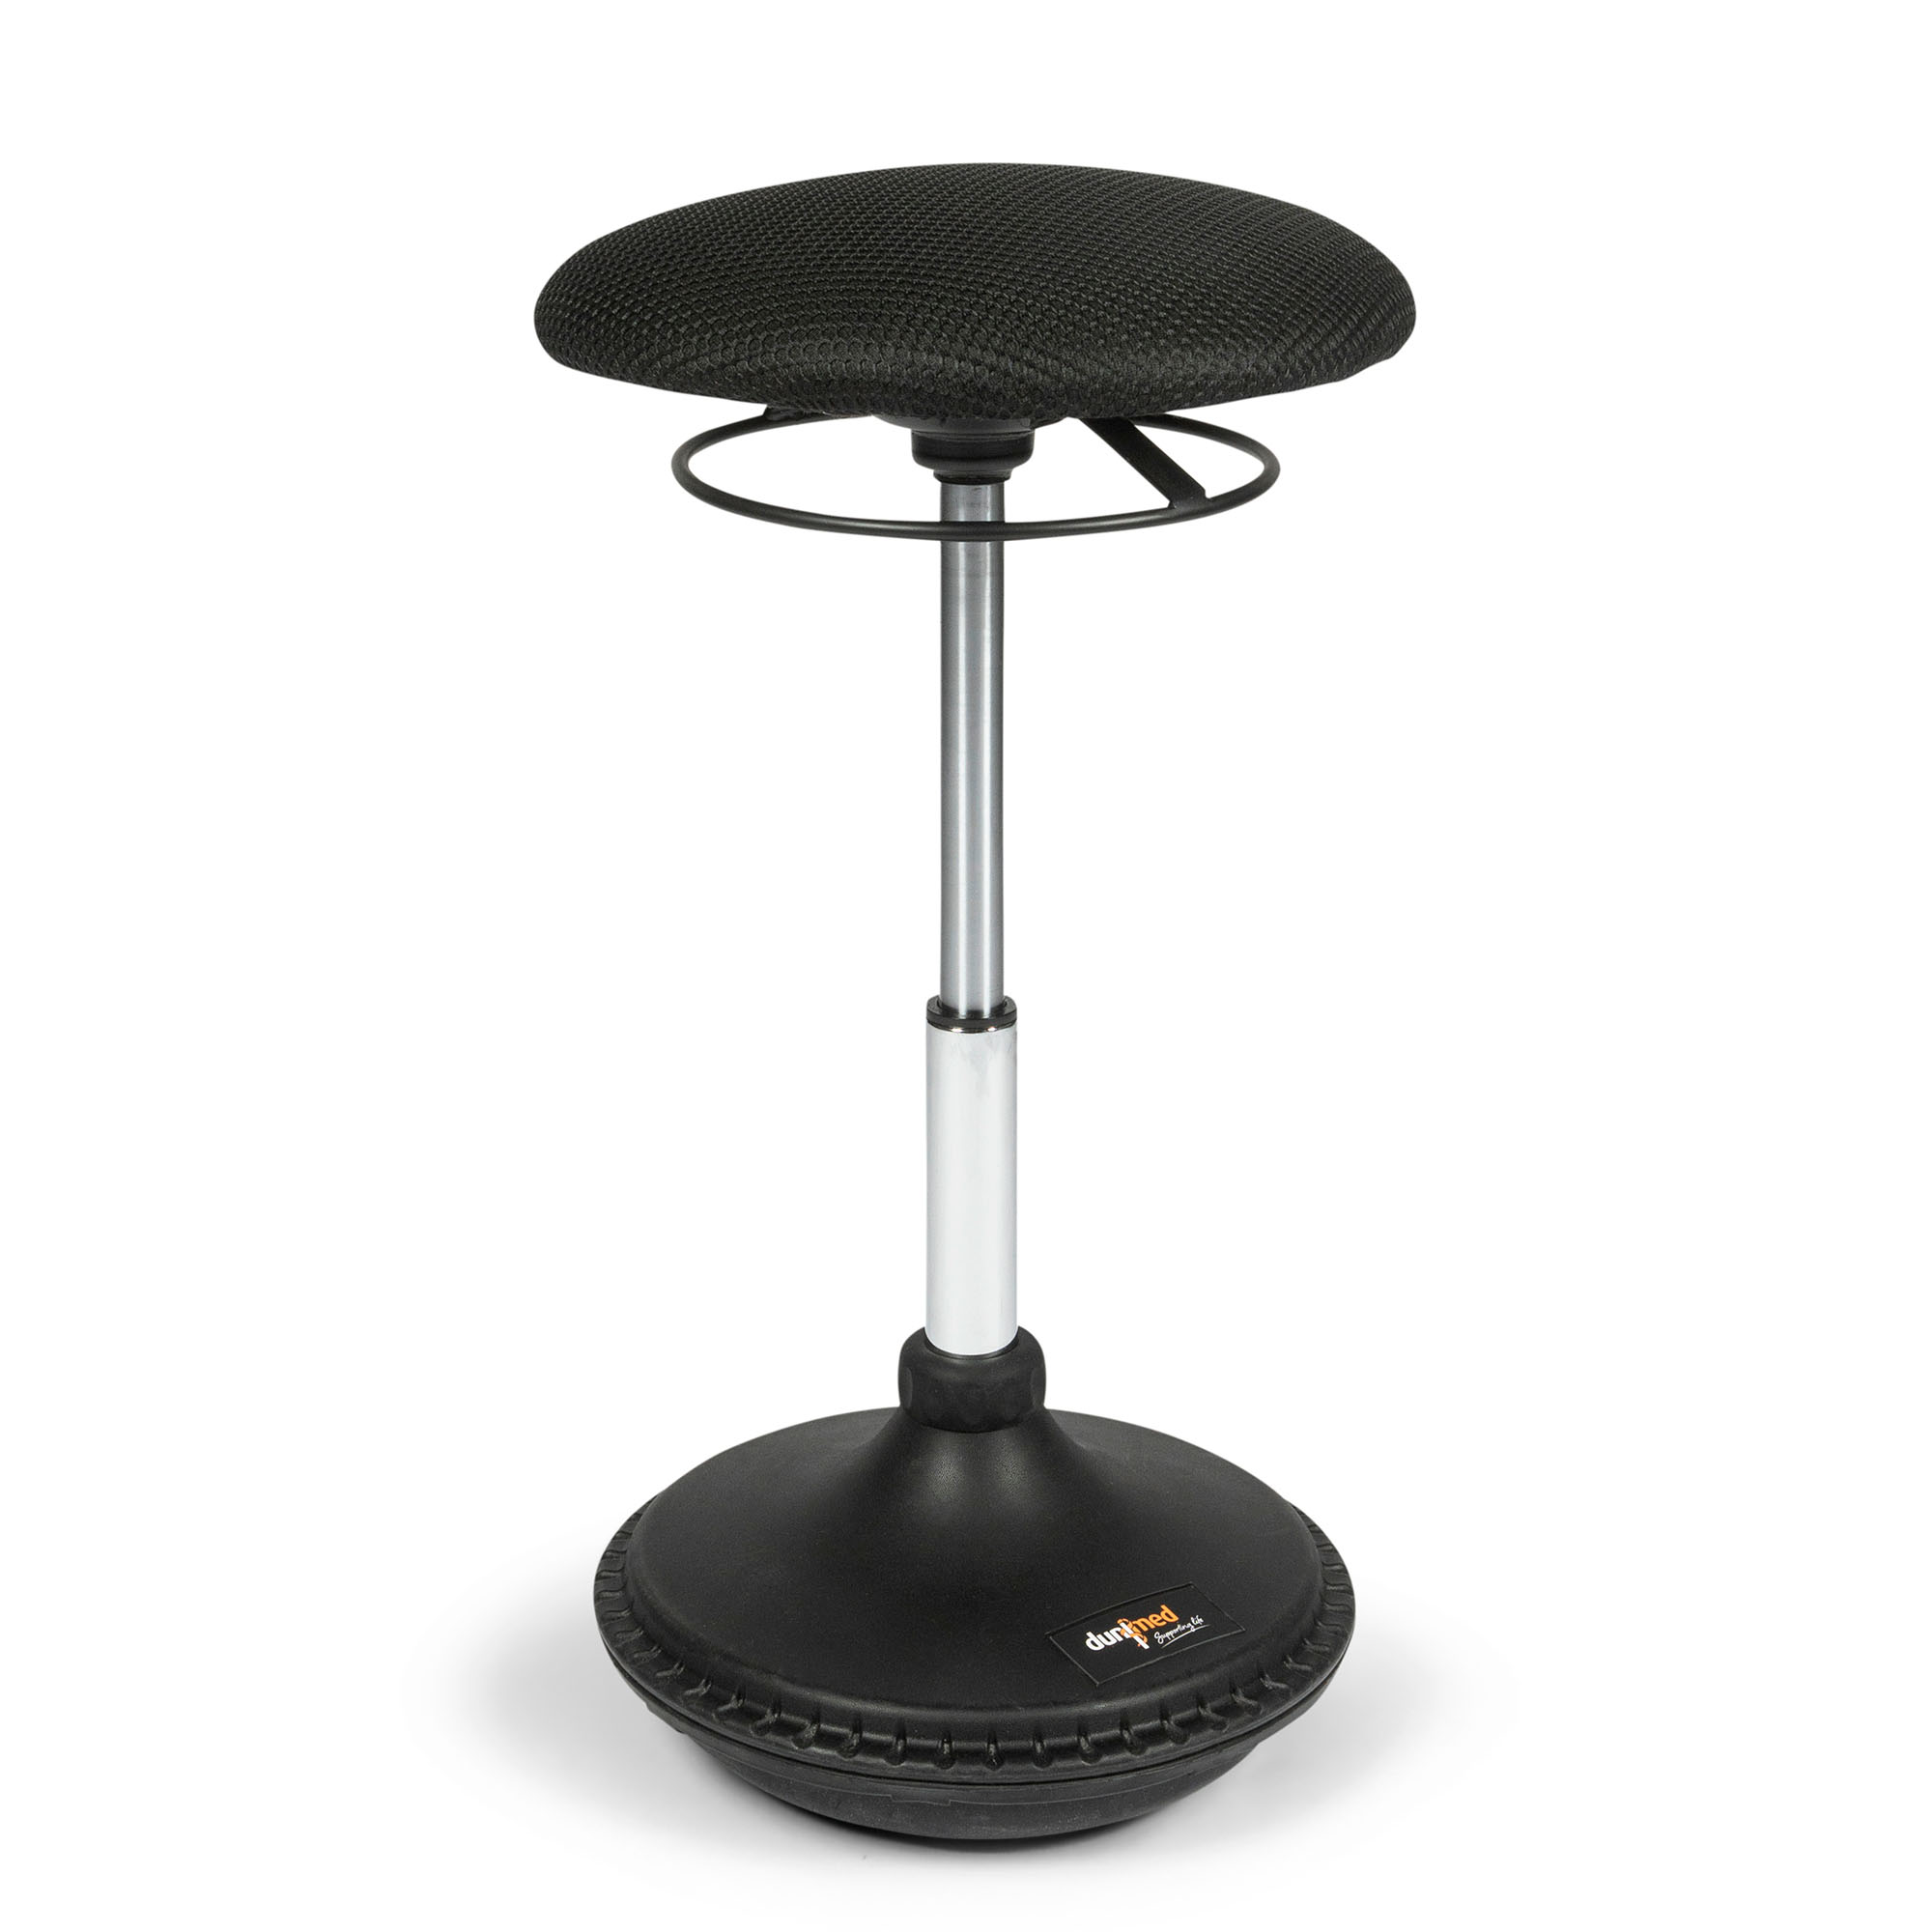 dunimedergonomic balance stool turnable left to right